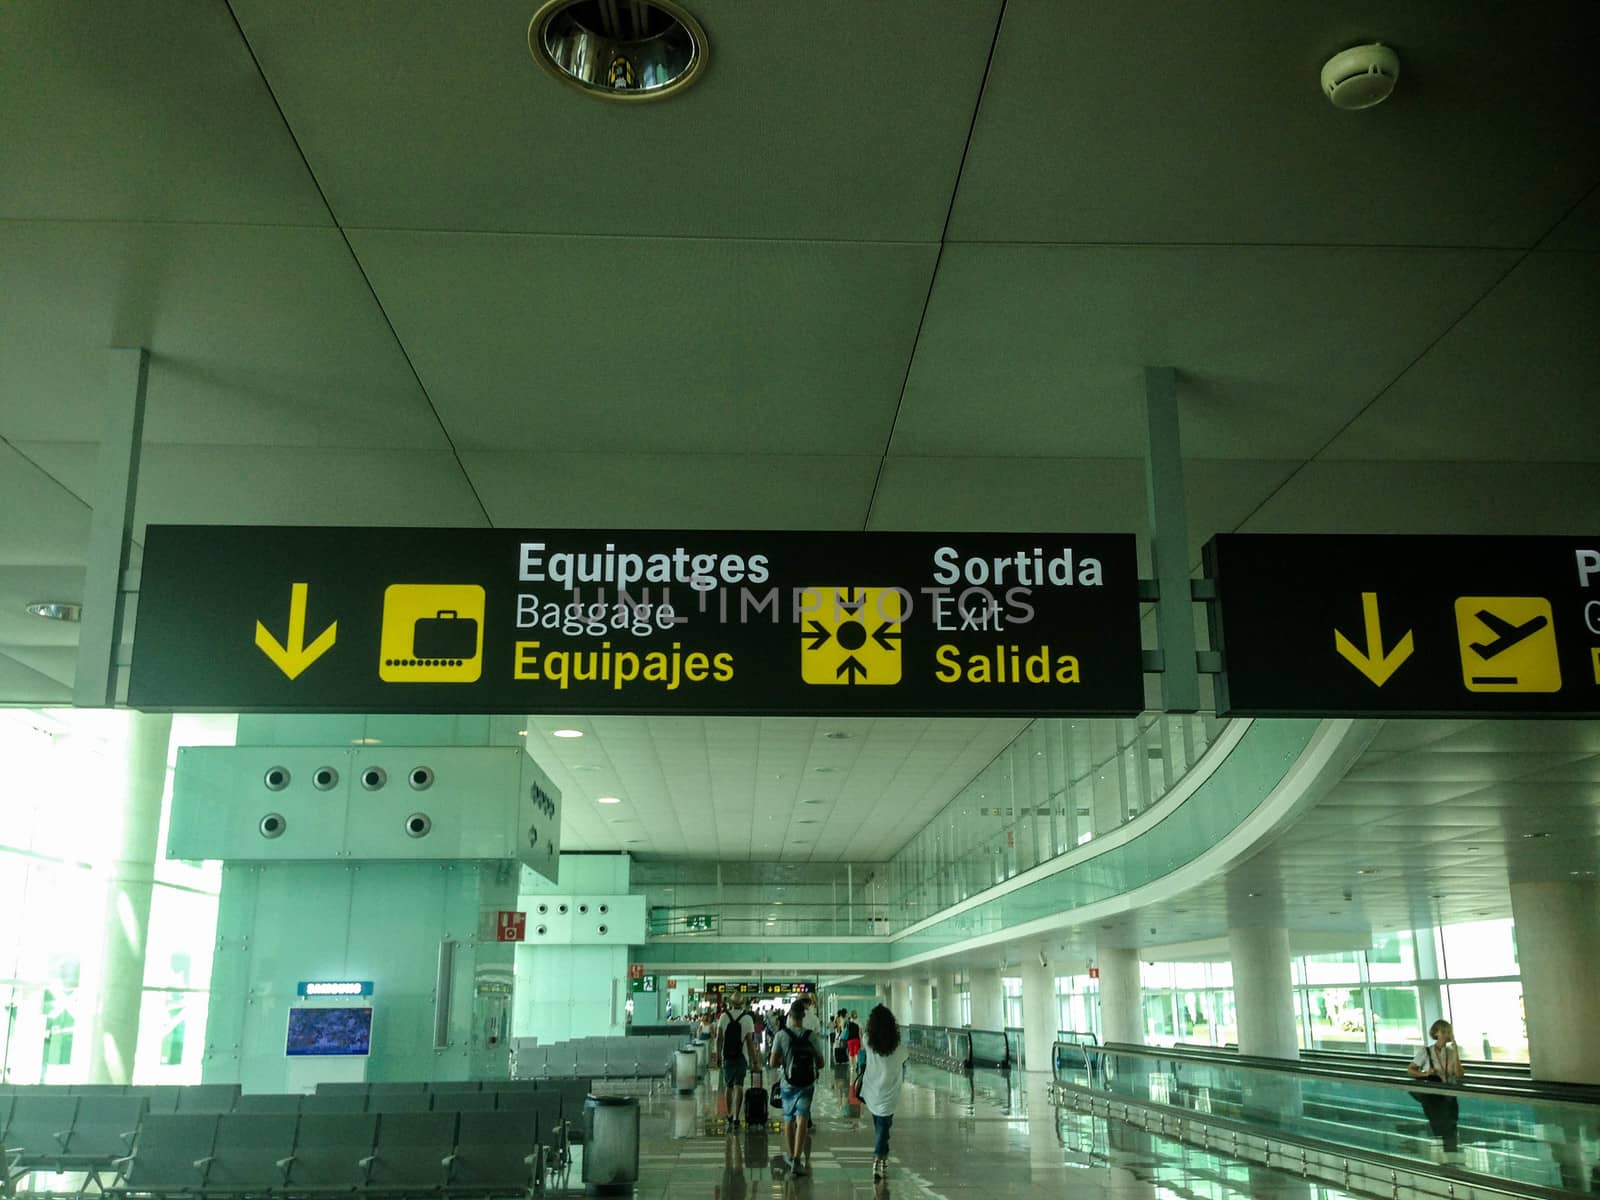 Josep Tarradellas Airport Barcelona-El Prat, Barcelona- Spain August 2015